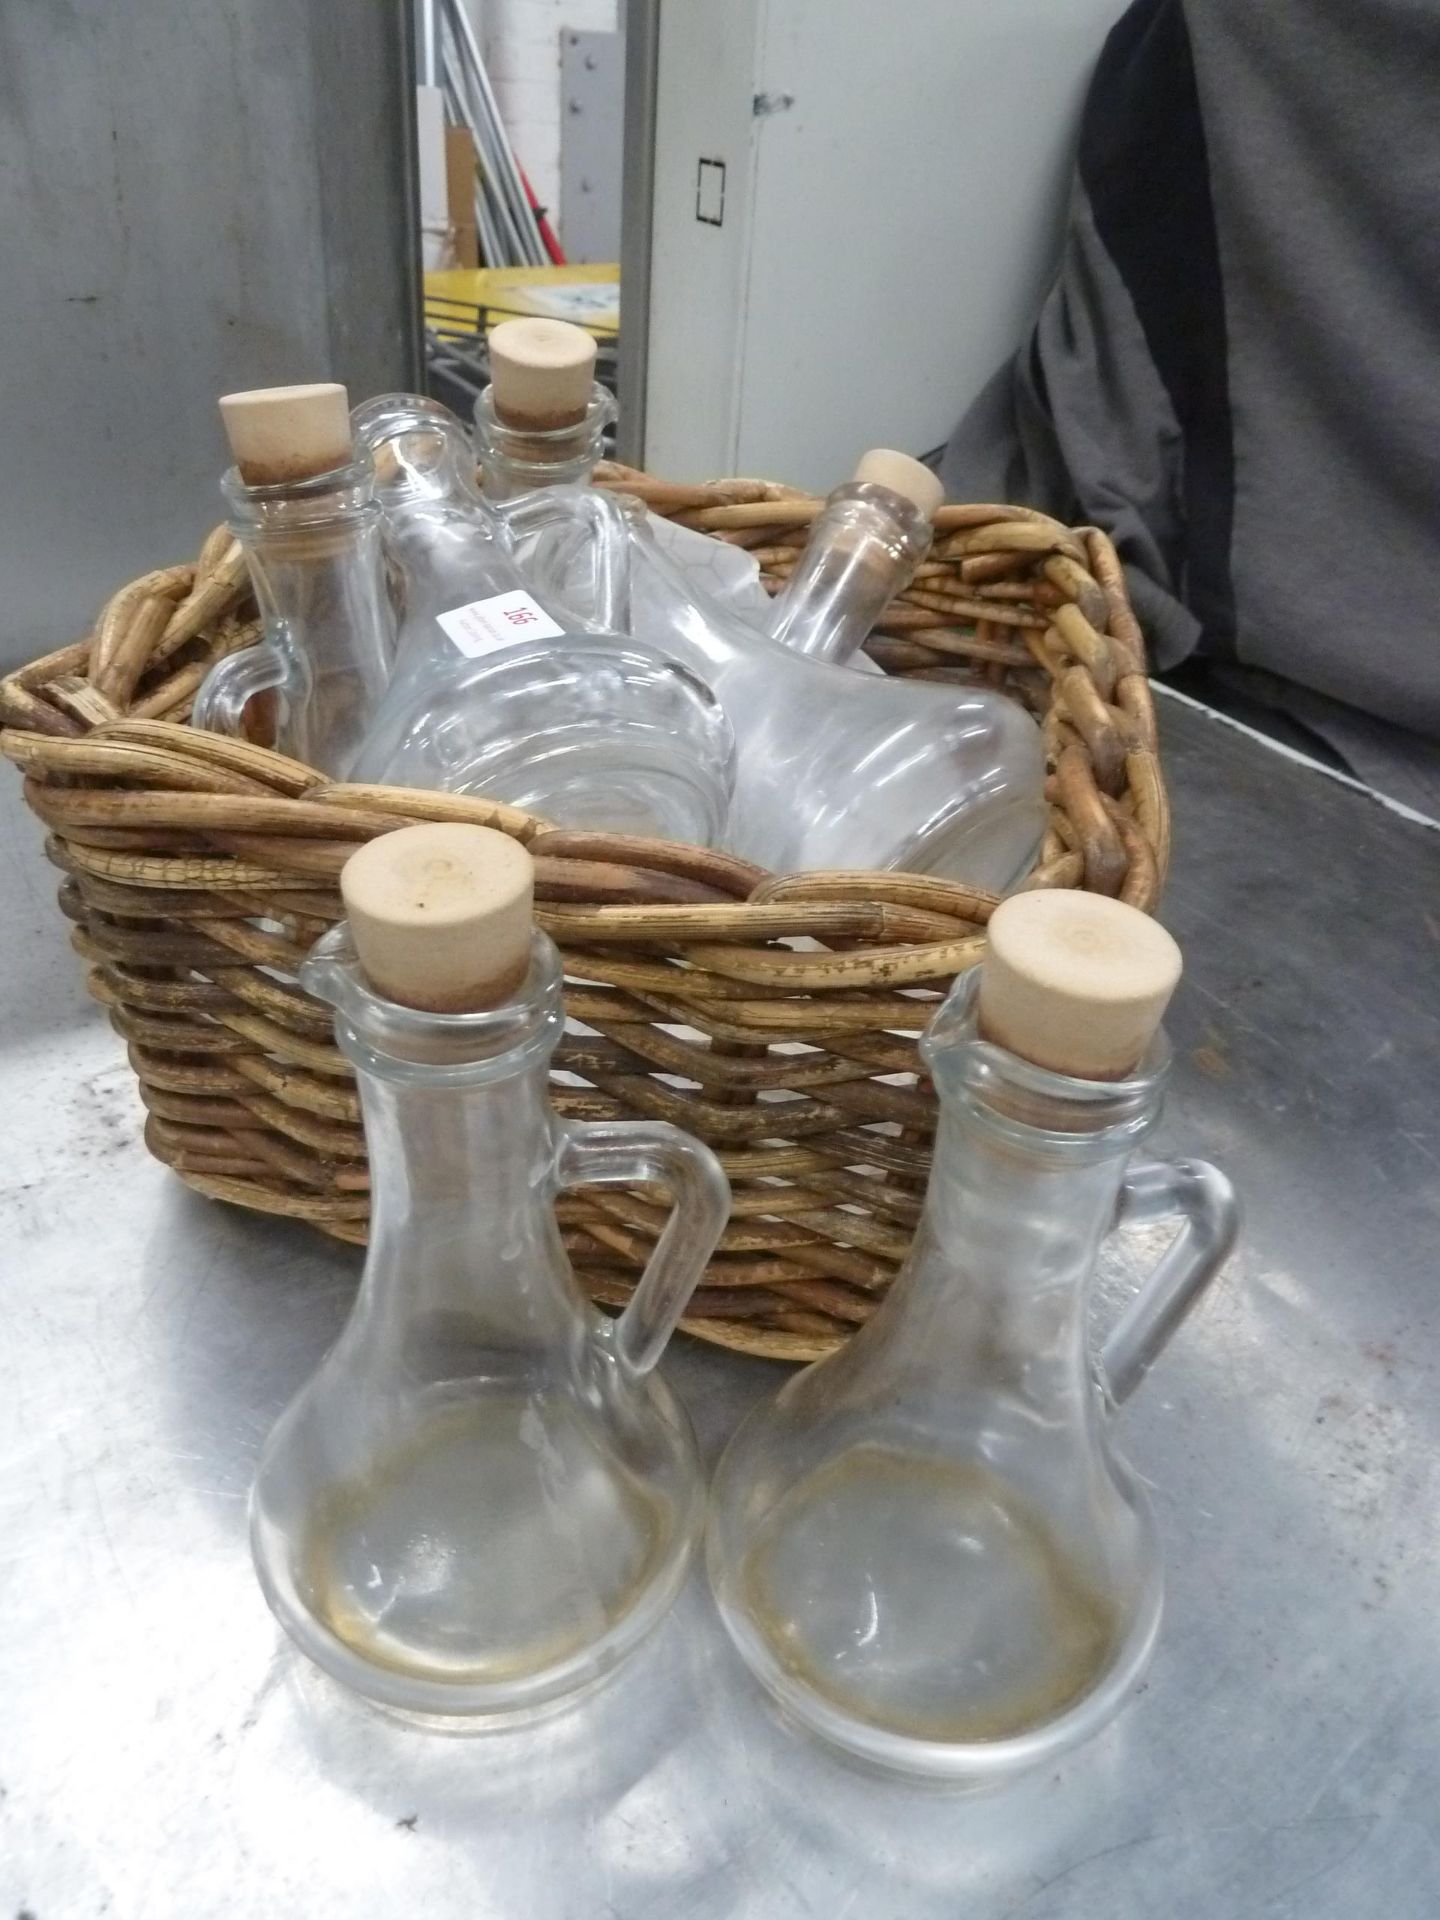 * basket with 7 x vinegar bottles